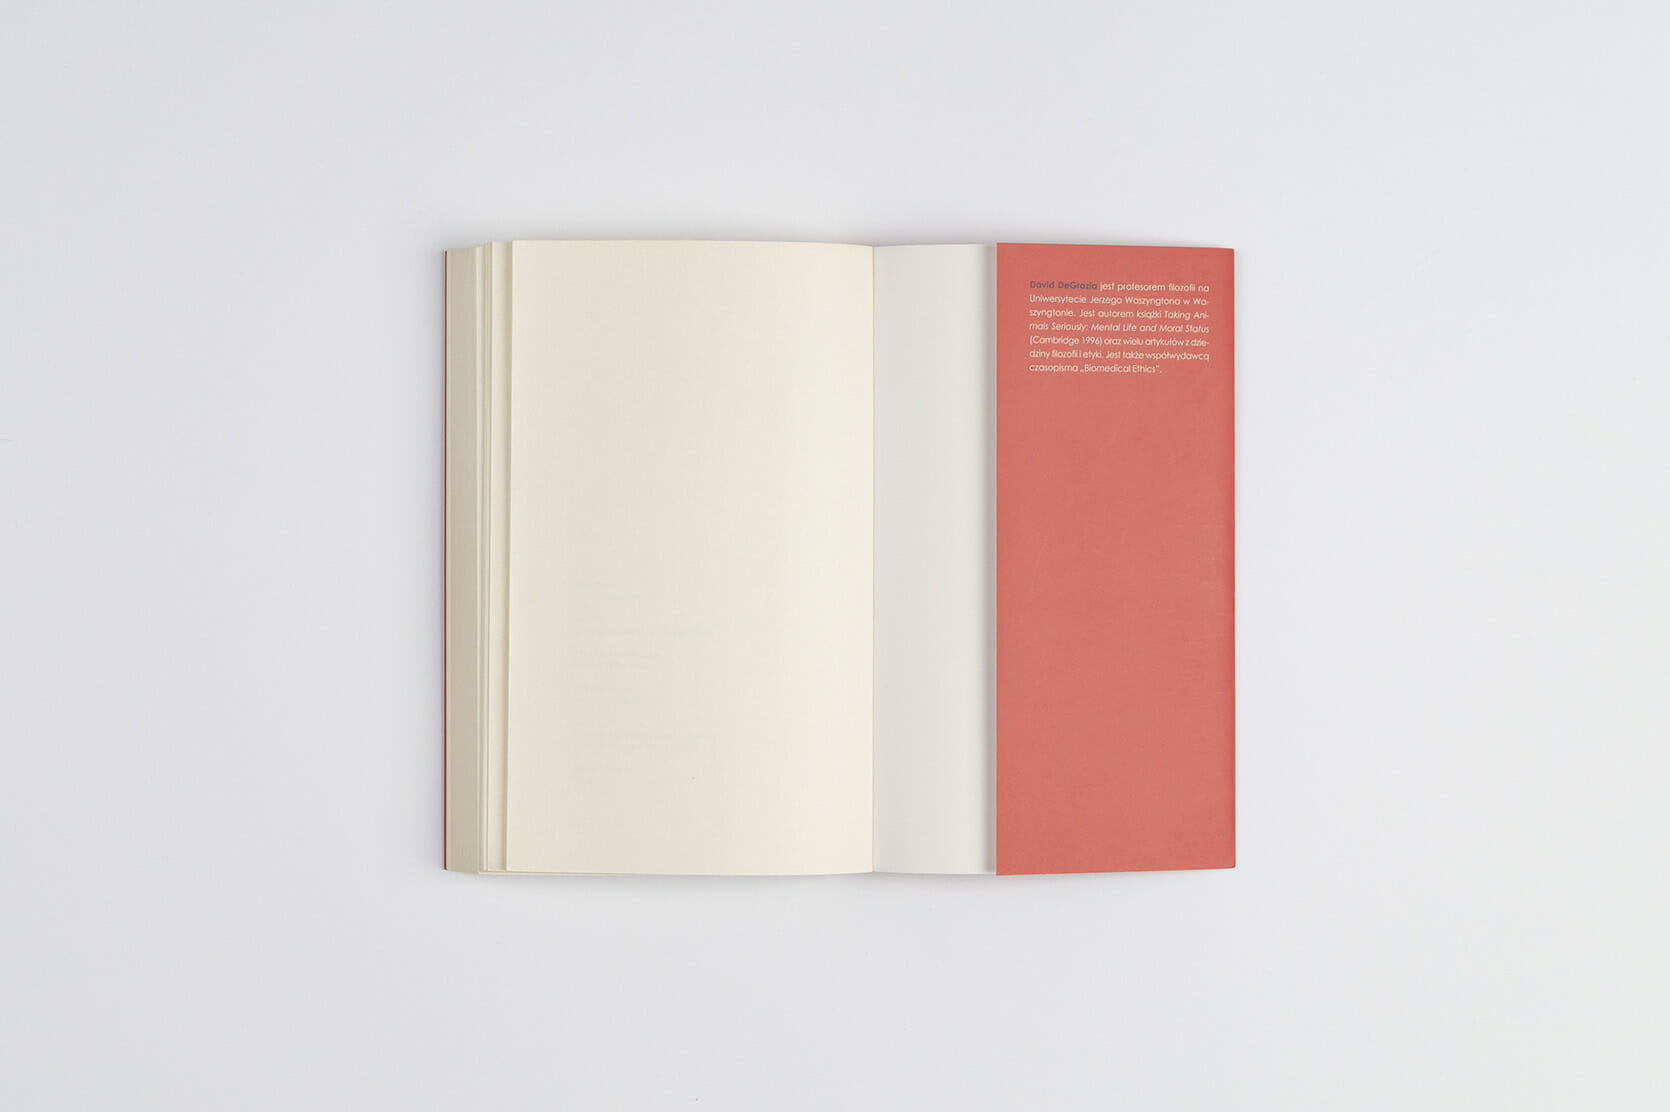 Animal rights - de grazia - book cover - typography